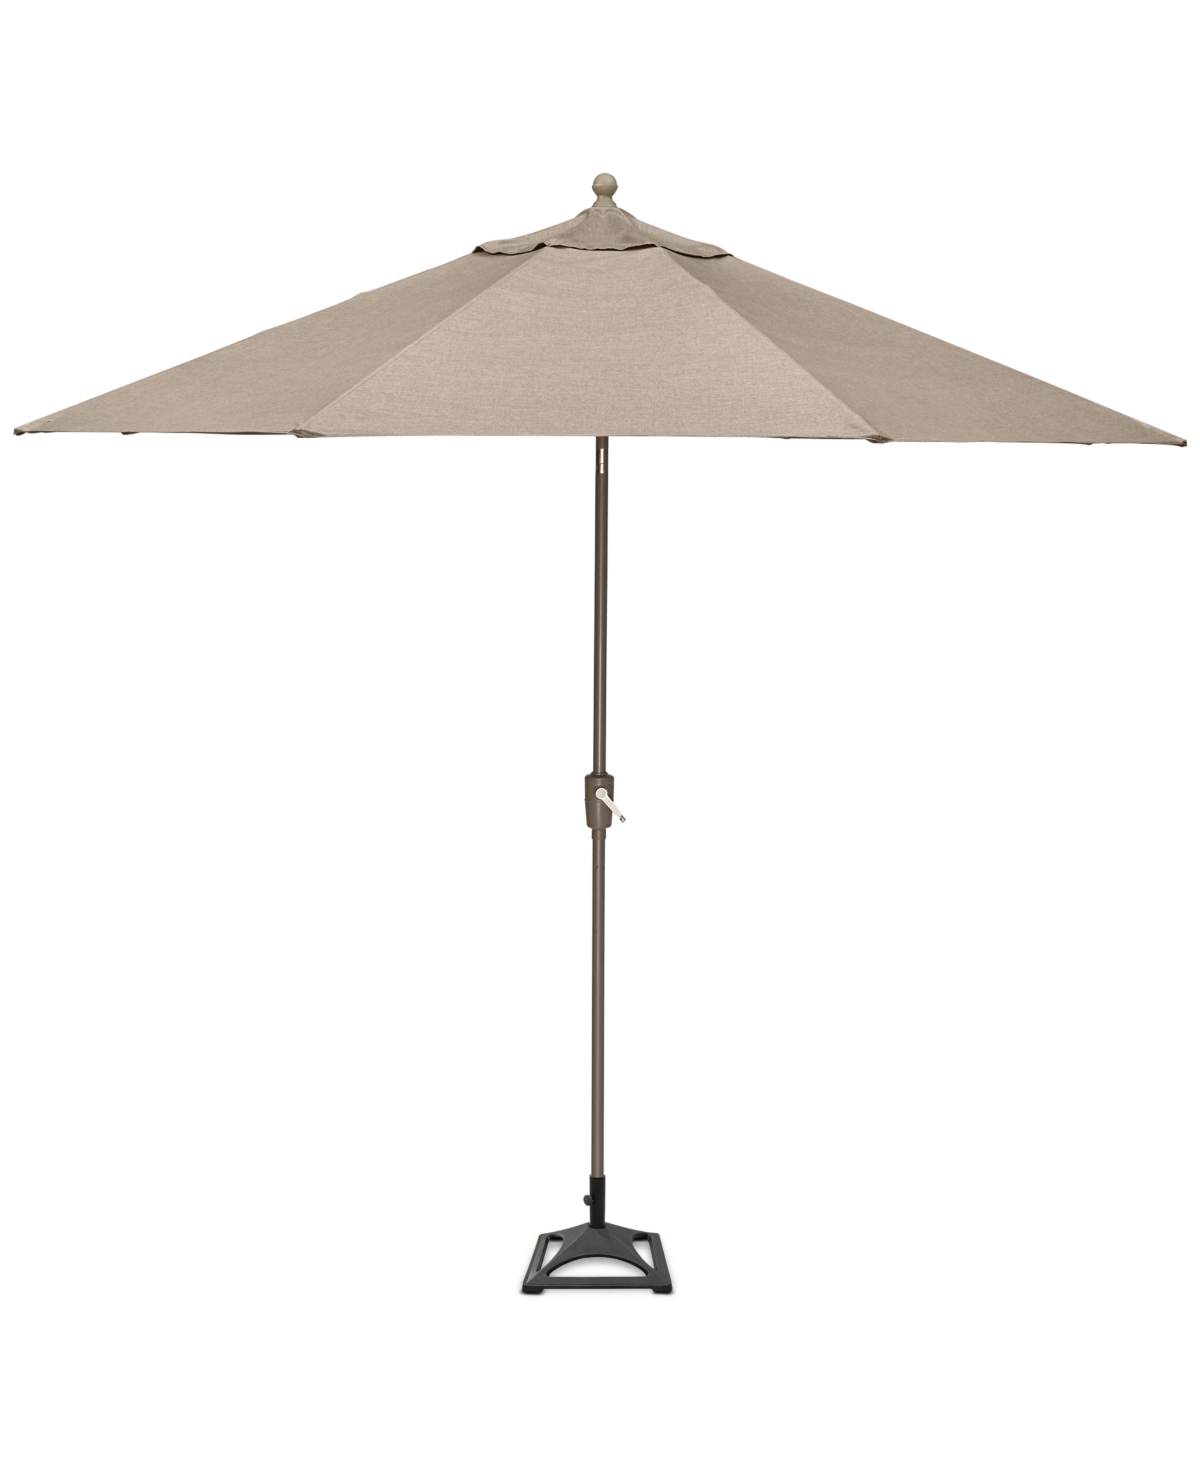 Wayland Outdoor 11 Umbrella and Base, Created for Macys